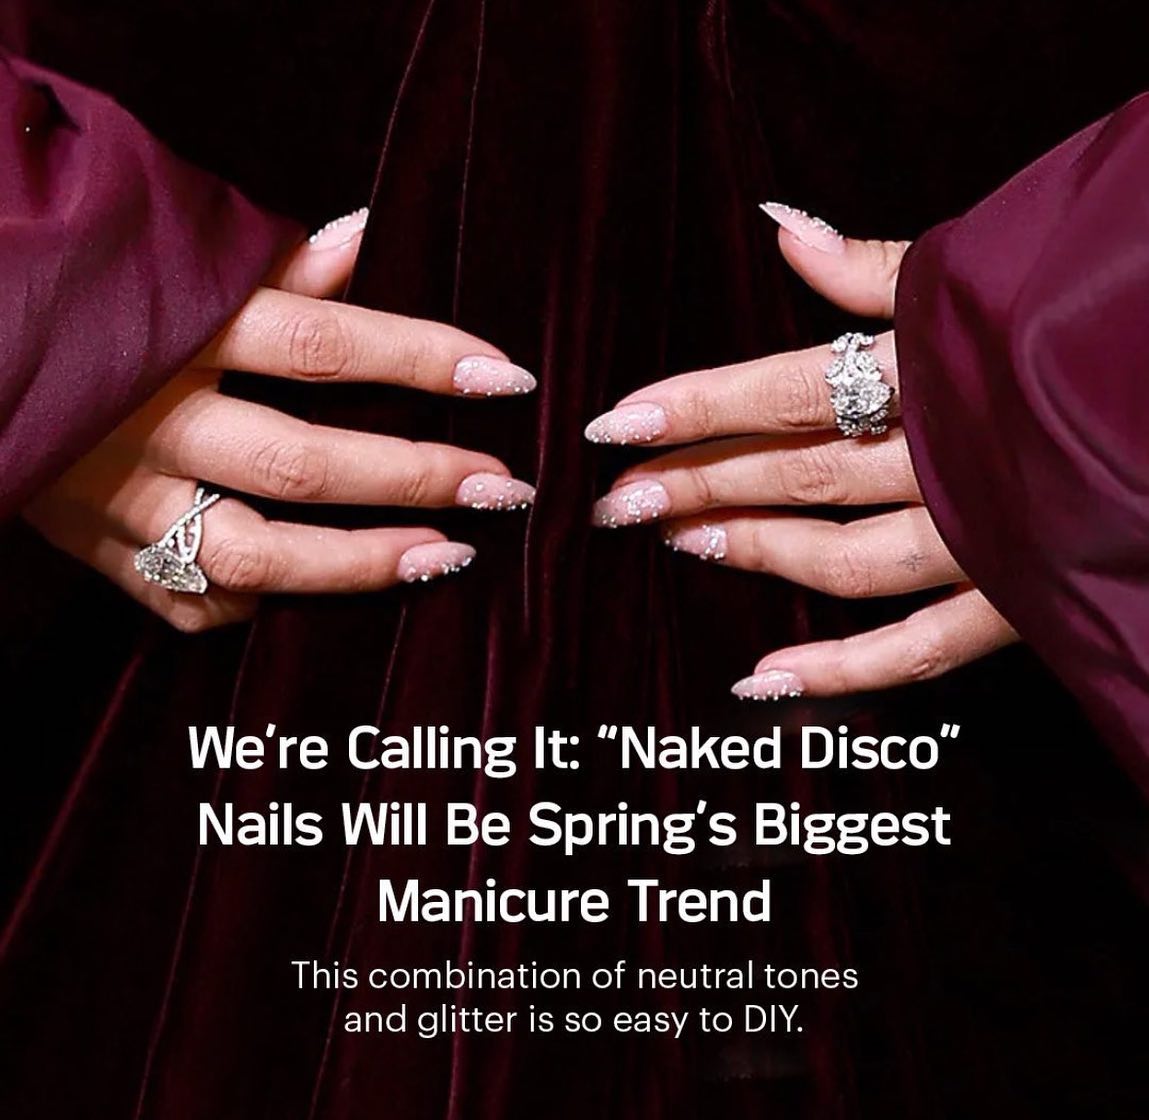 Naked Disco nails: Τα αστραφτερά νύχια της Selena Gomez δεν είναι για να τα κρύβεις